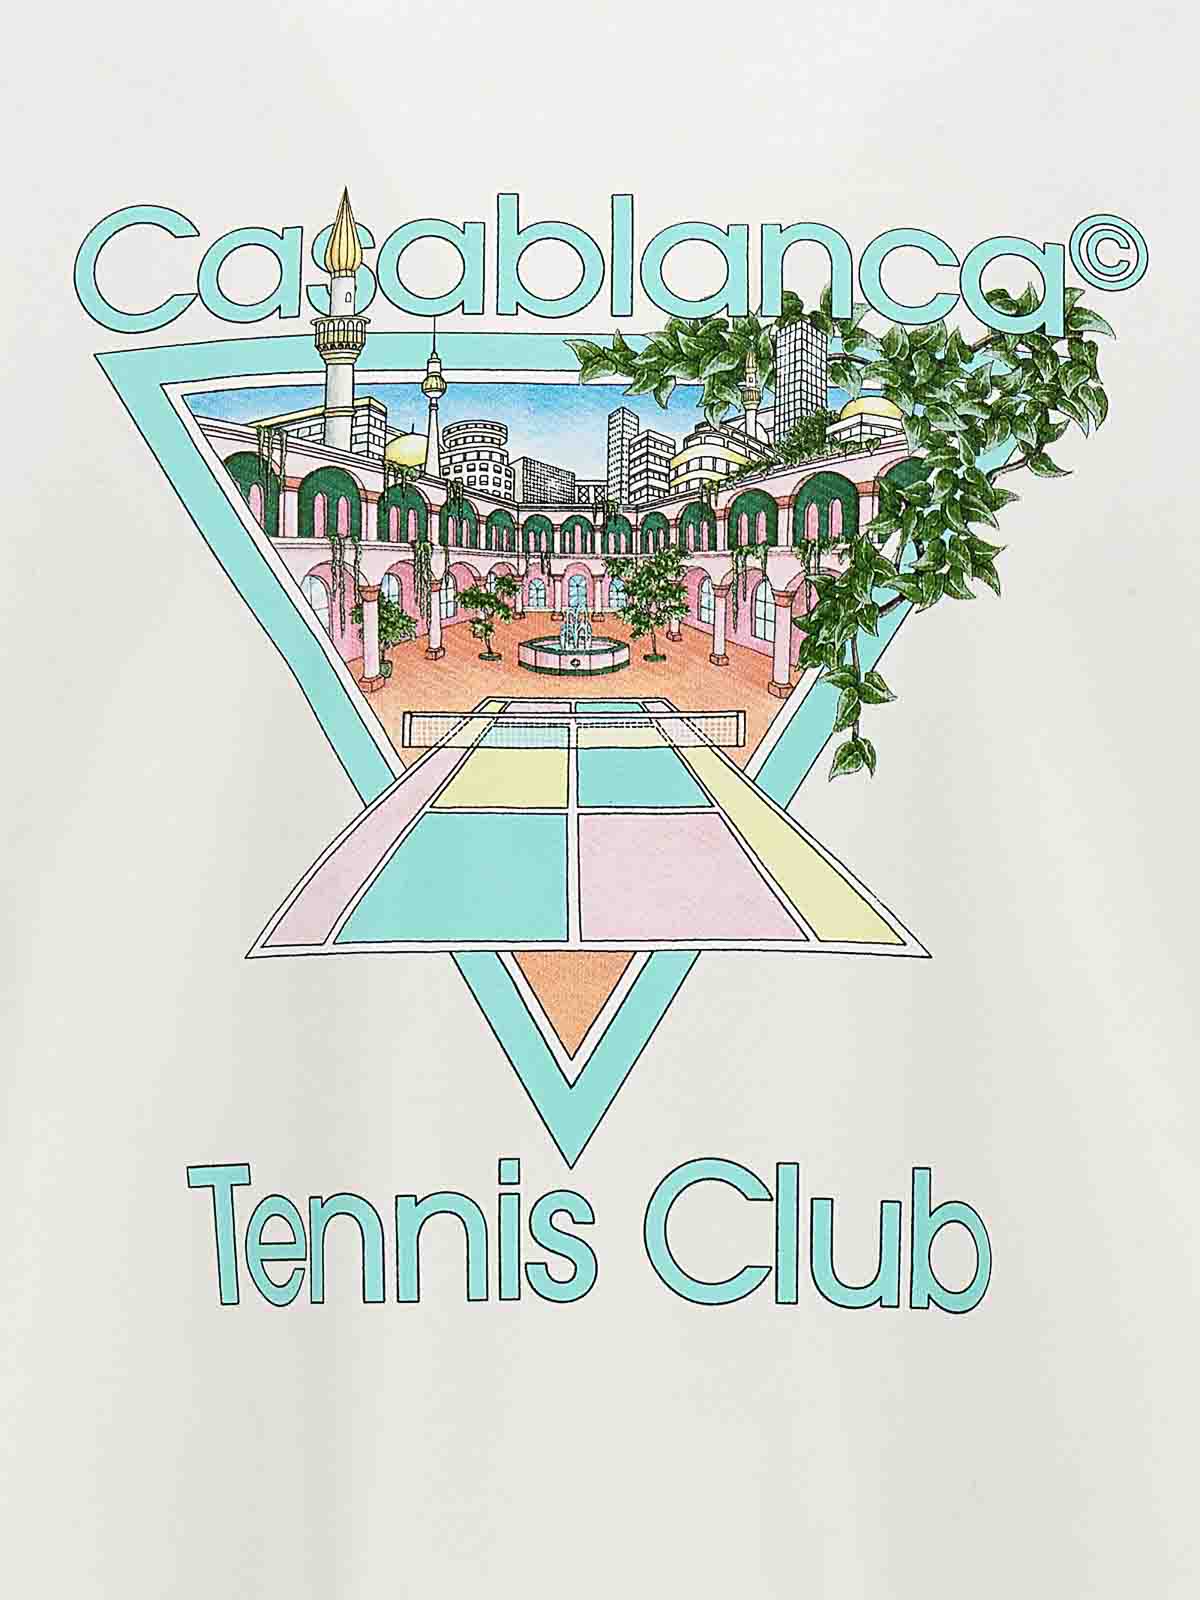 Shop Casablanca Tennis Club Icon Sweatshirt In White